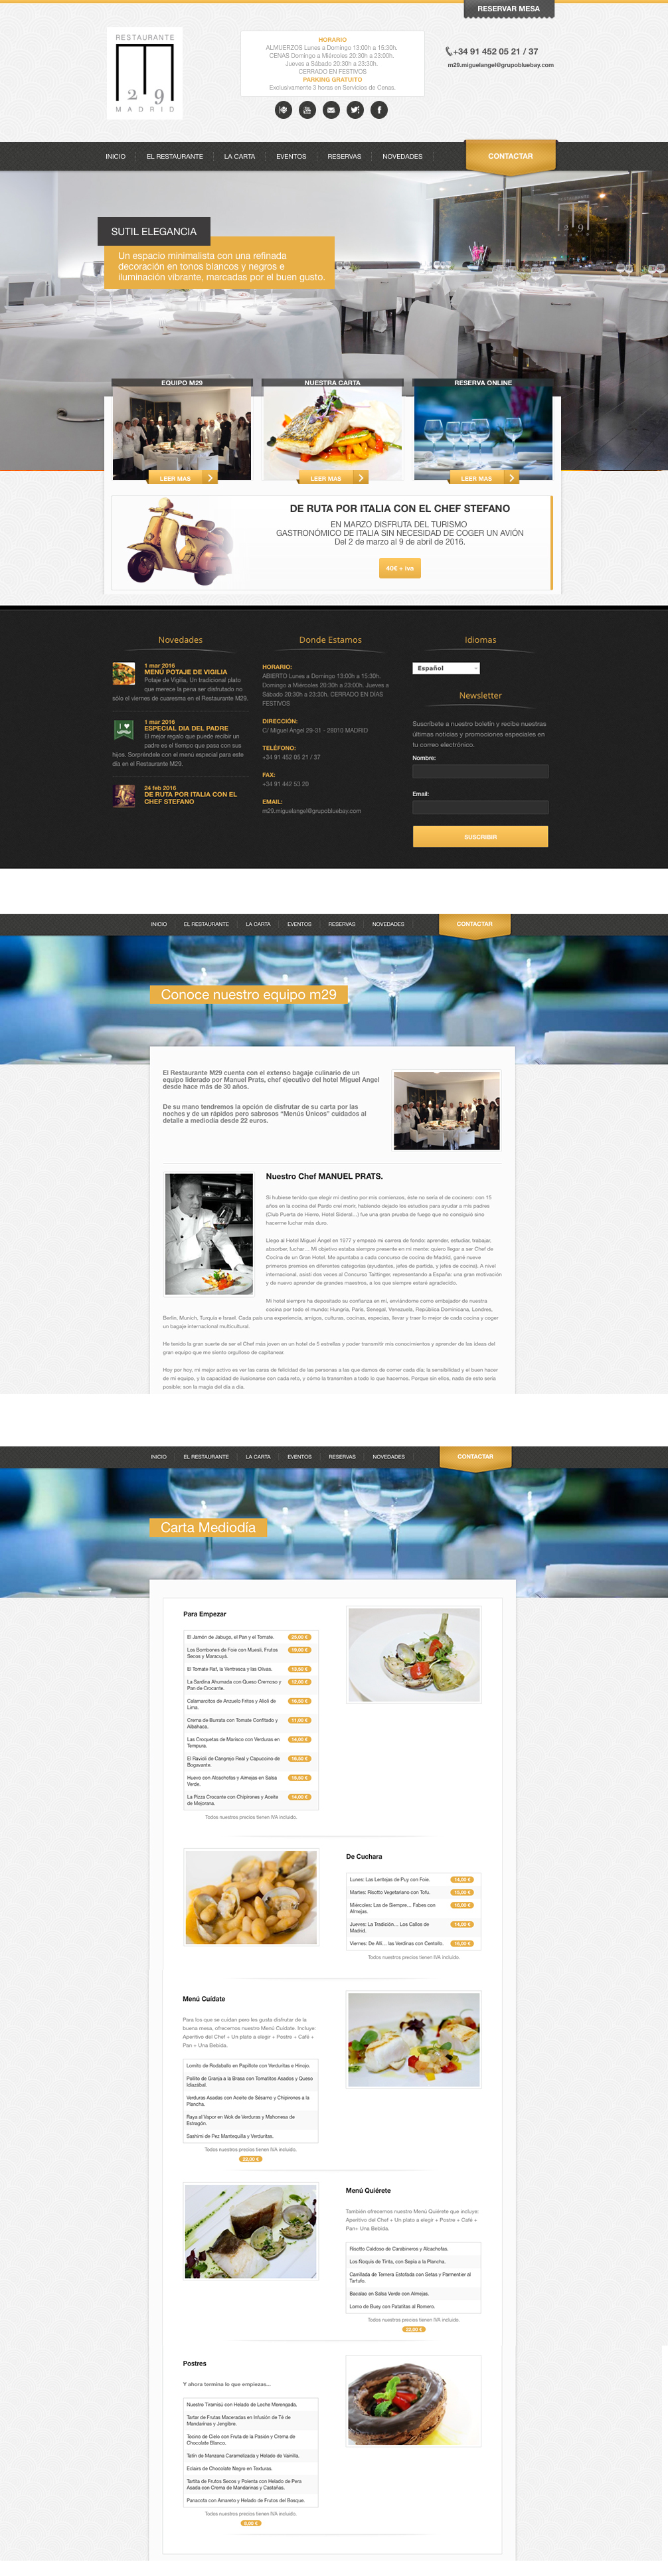 Diseño web restaurantes madrid Restaurante M29